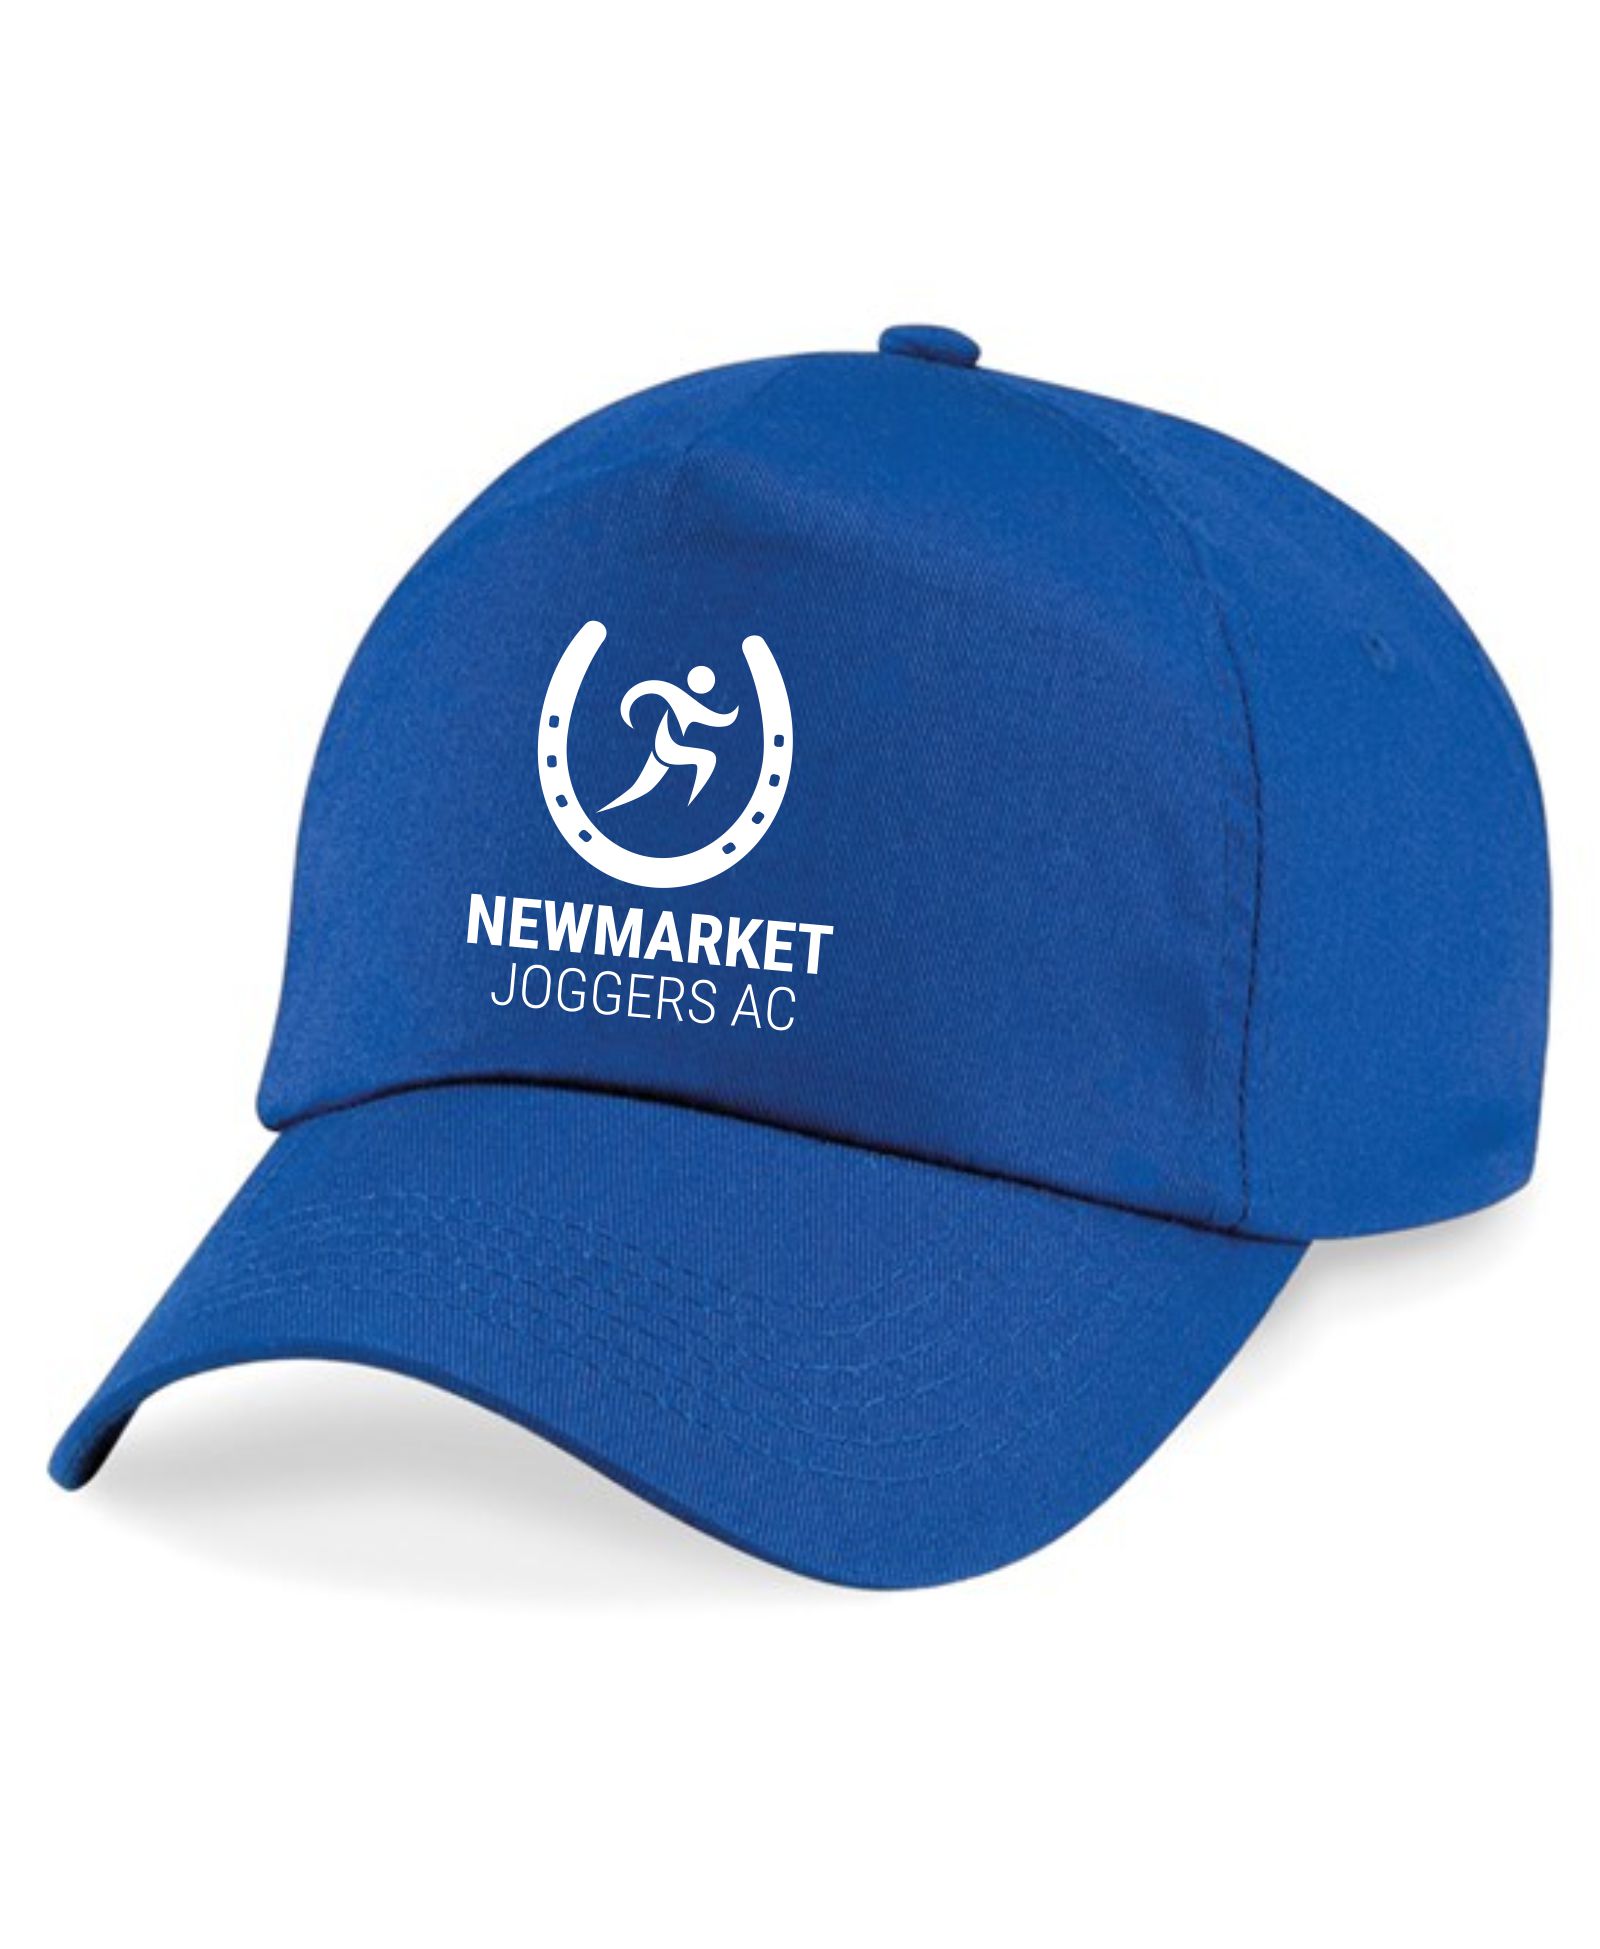 Newmarket Joggers – Outerwear Cap